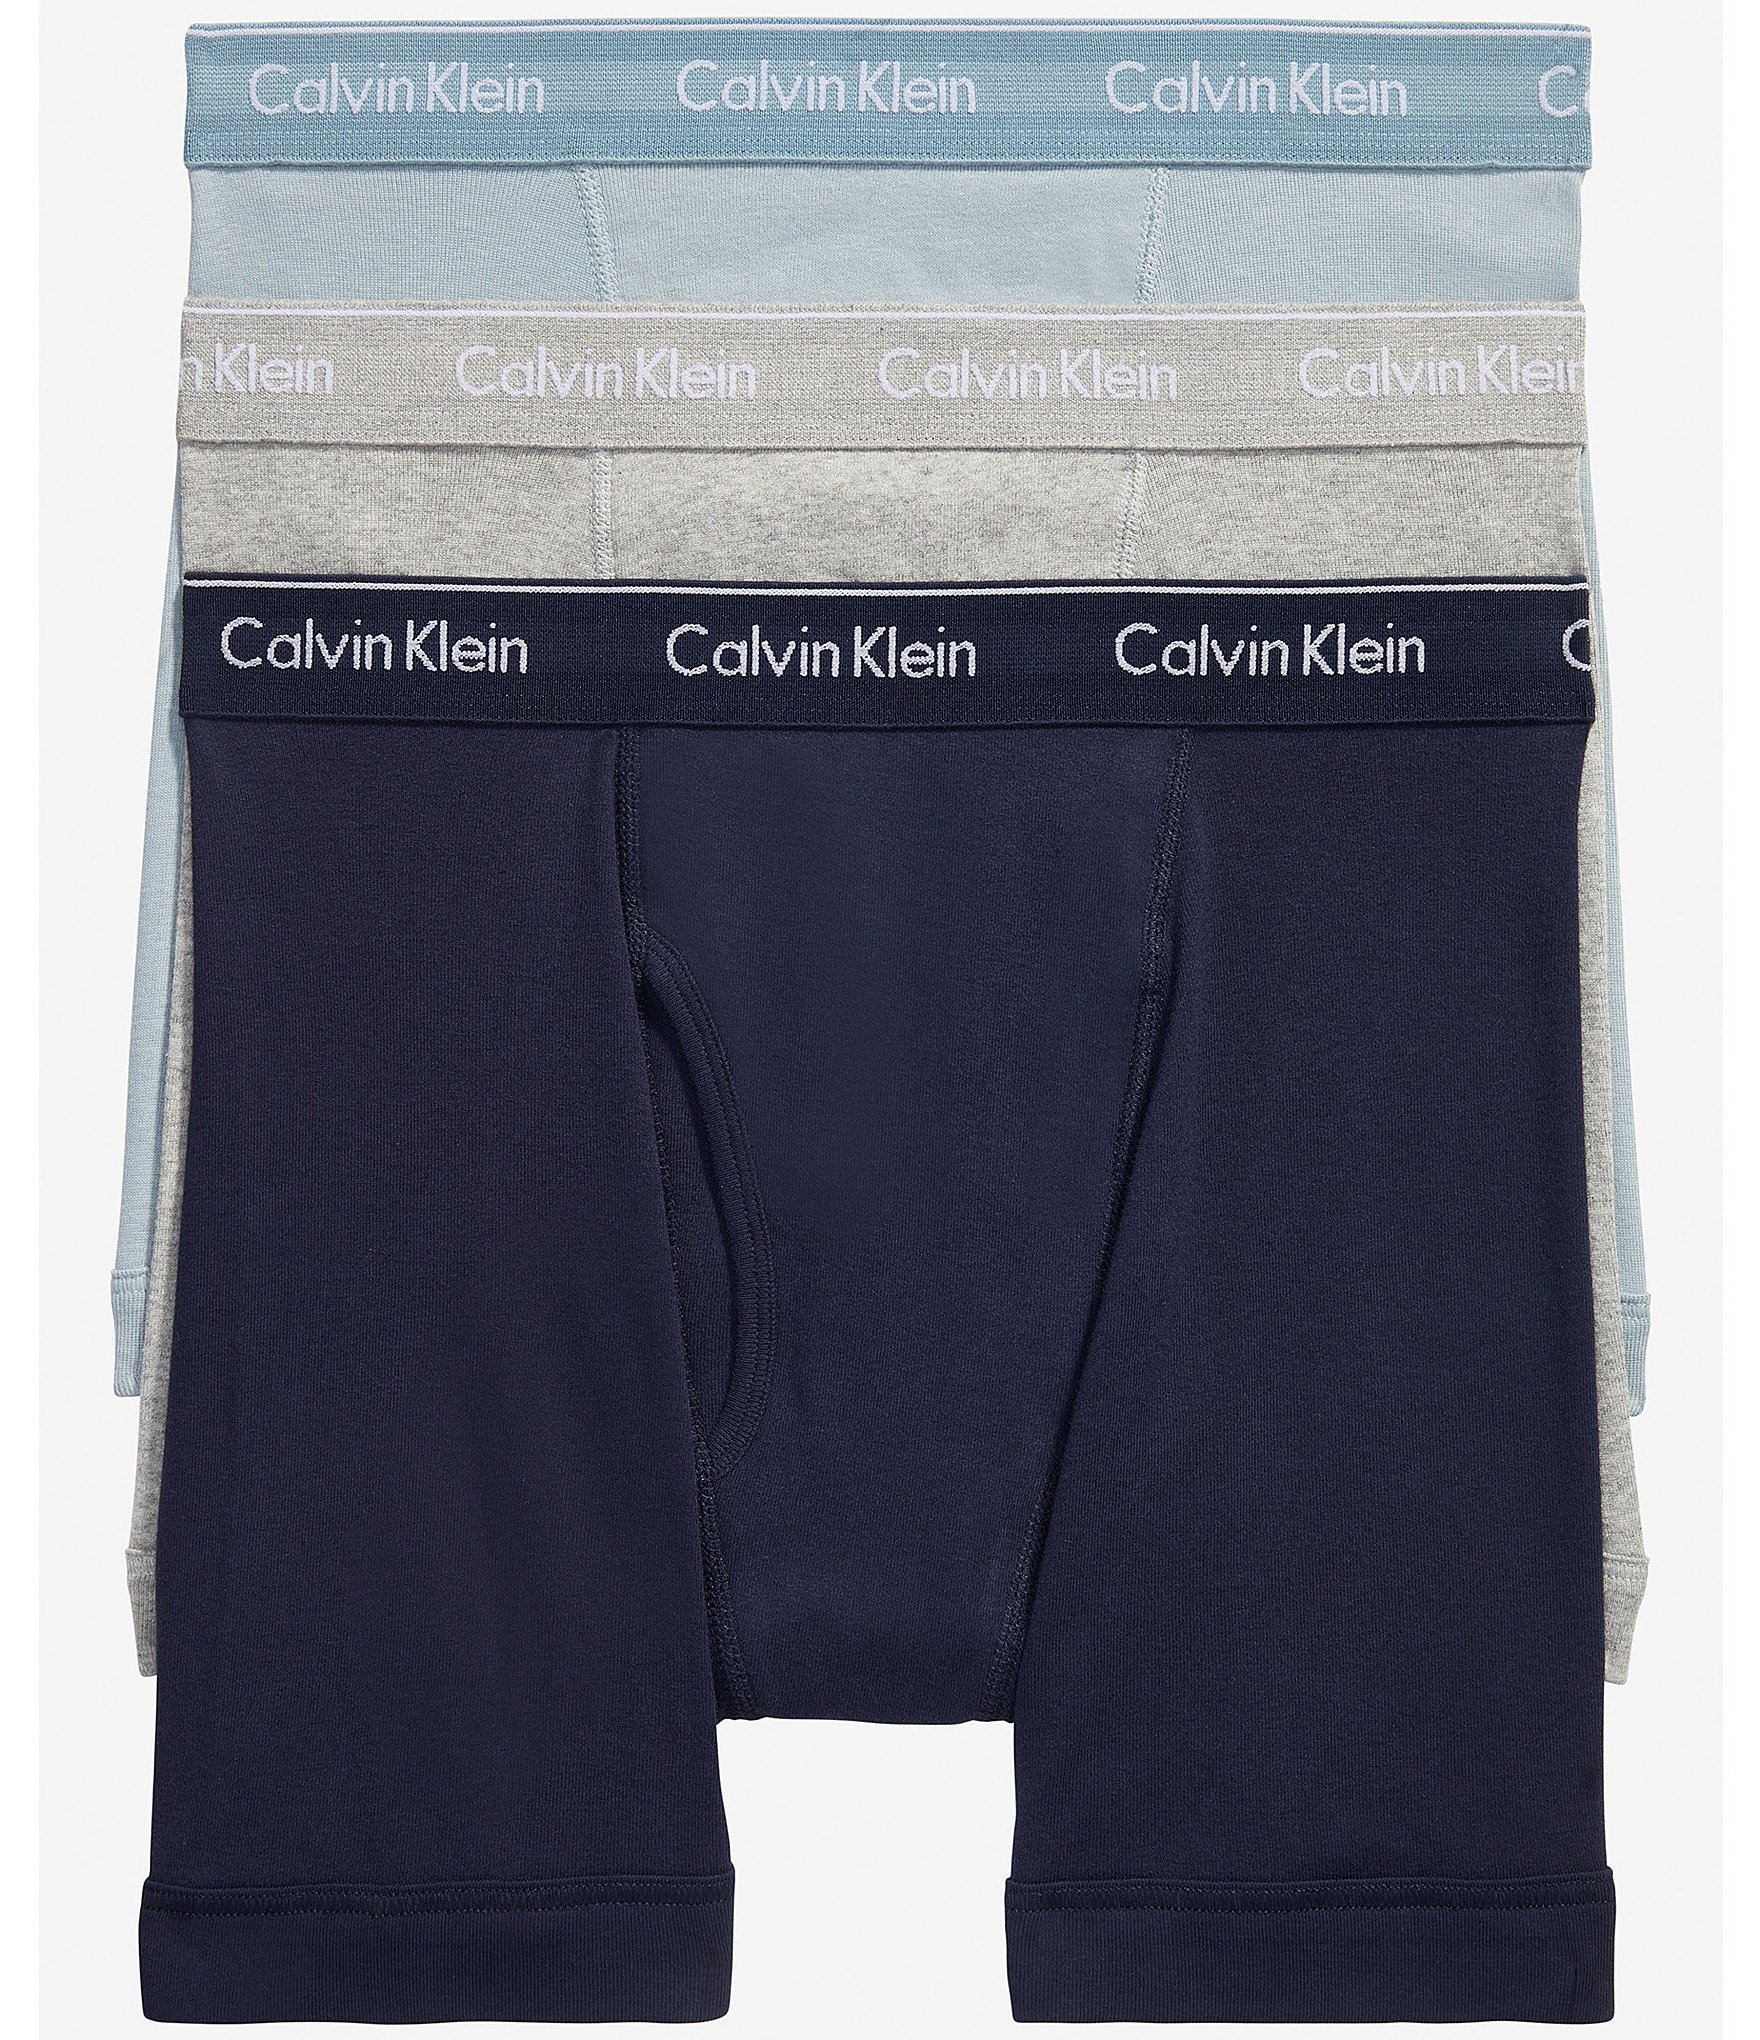 Calvin Klein Men's Cotton Classics 4-Pack Briefs, White, Small